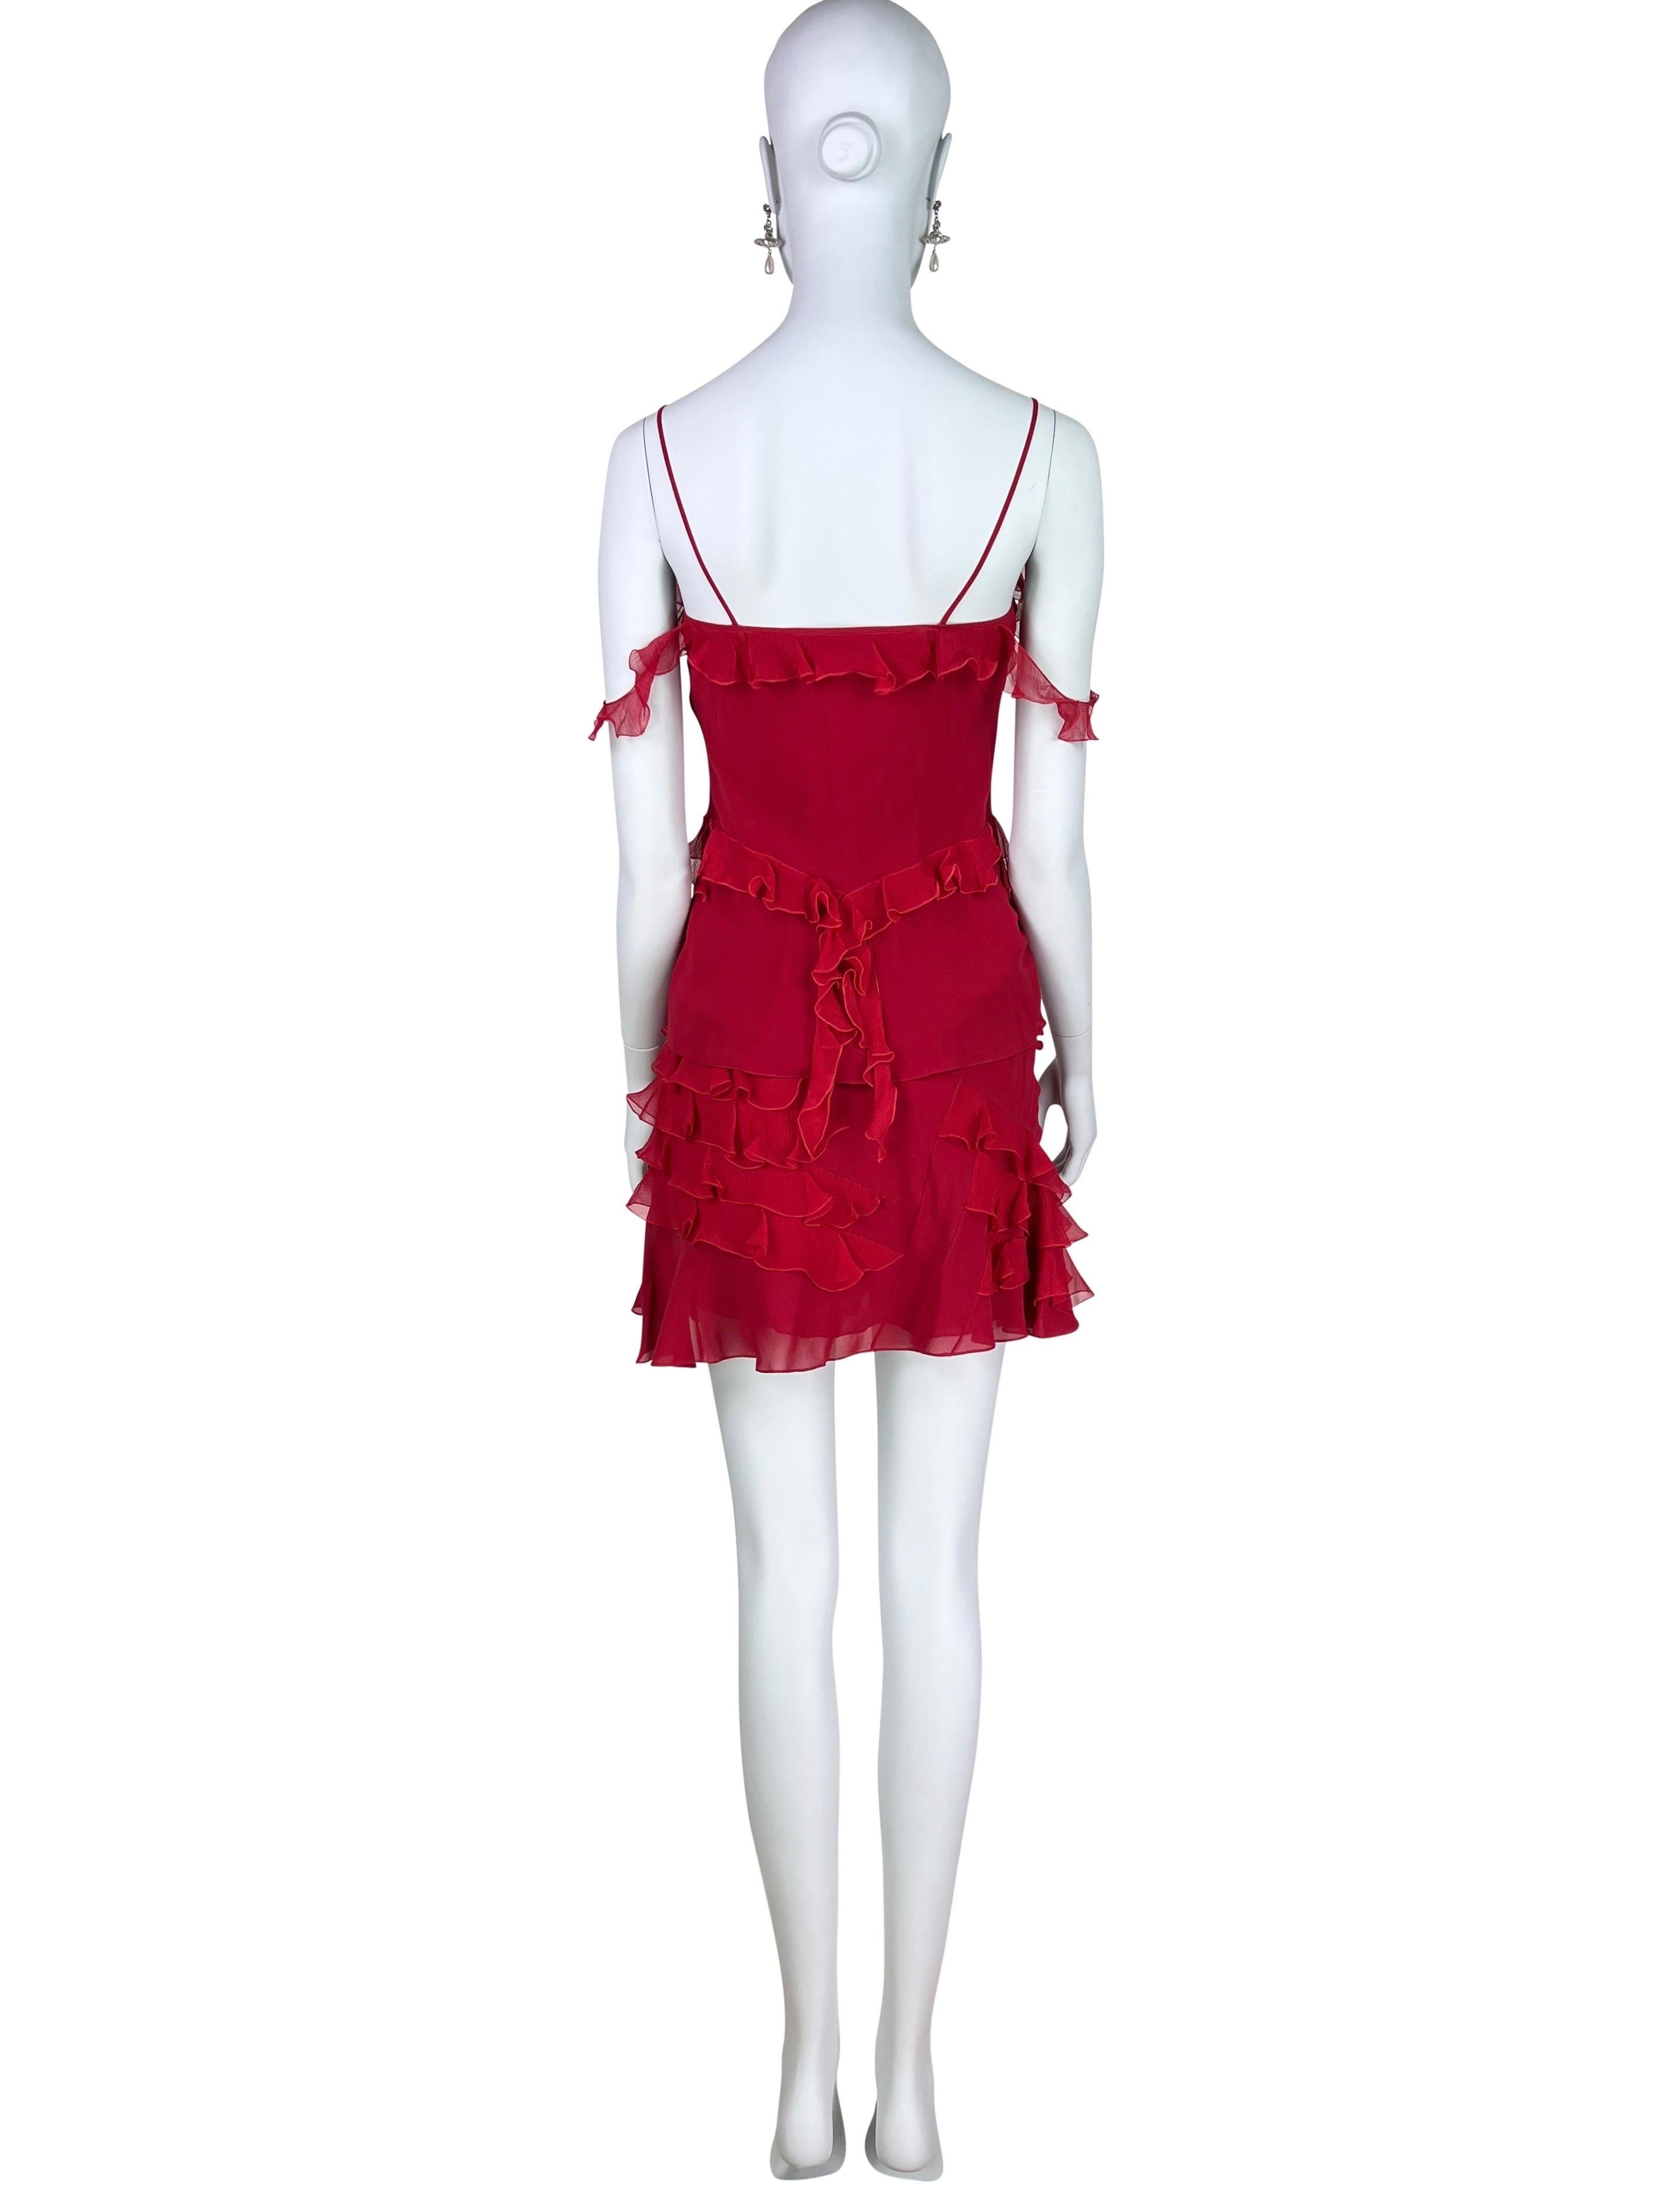 Dior by John Galliano Fall 2004 Red Ruffled Silk Set 3